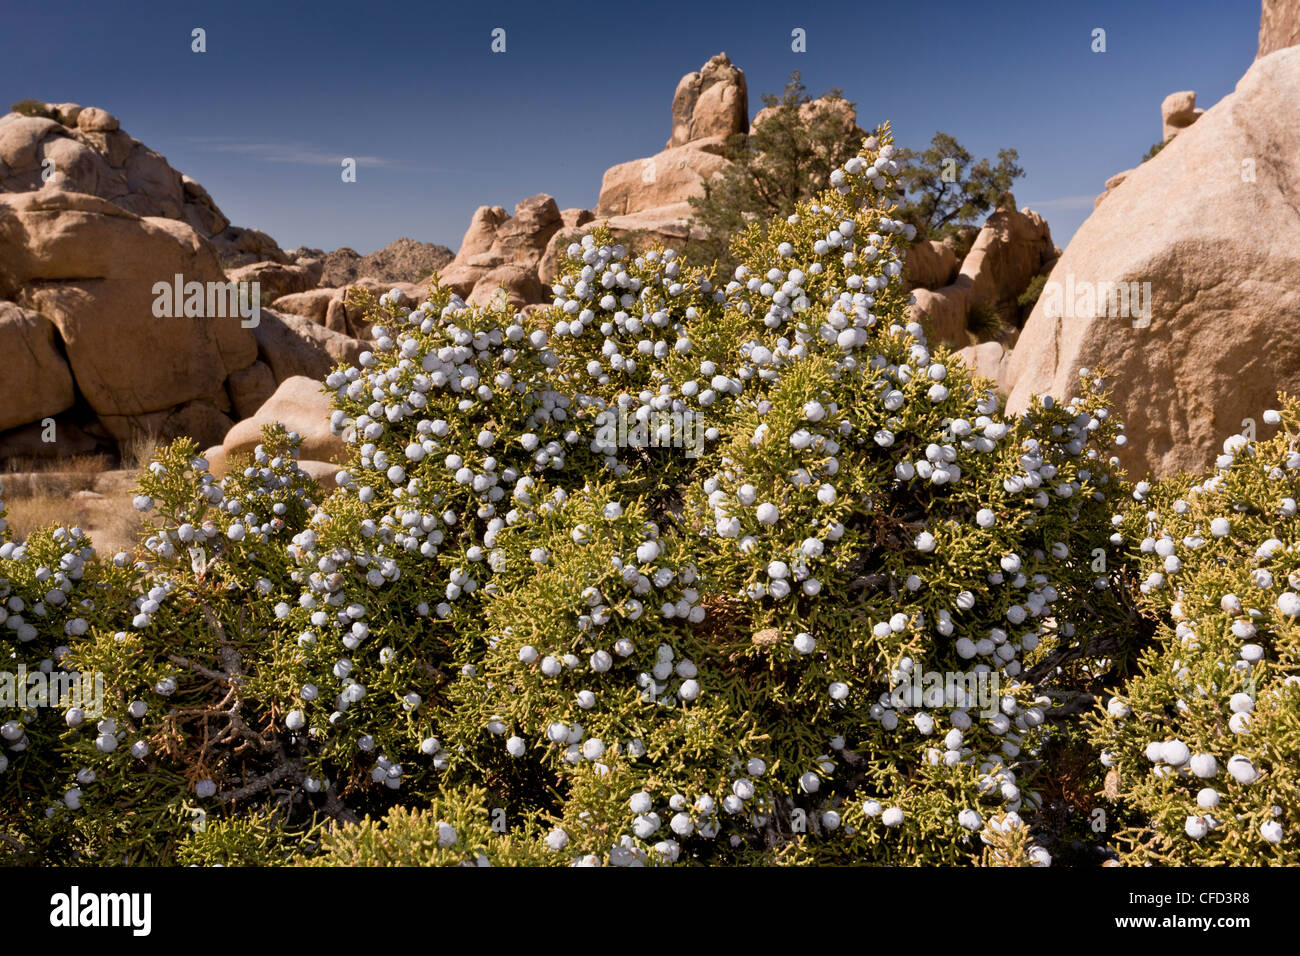 Le genévrier, Juniperus californica californien dans les fruits ; Parc National de Joshua Tree, California, USA Banque D'Images